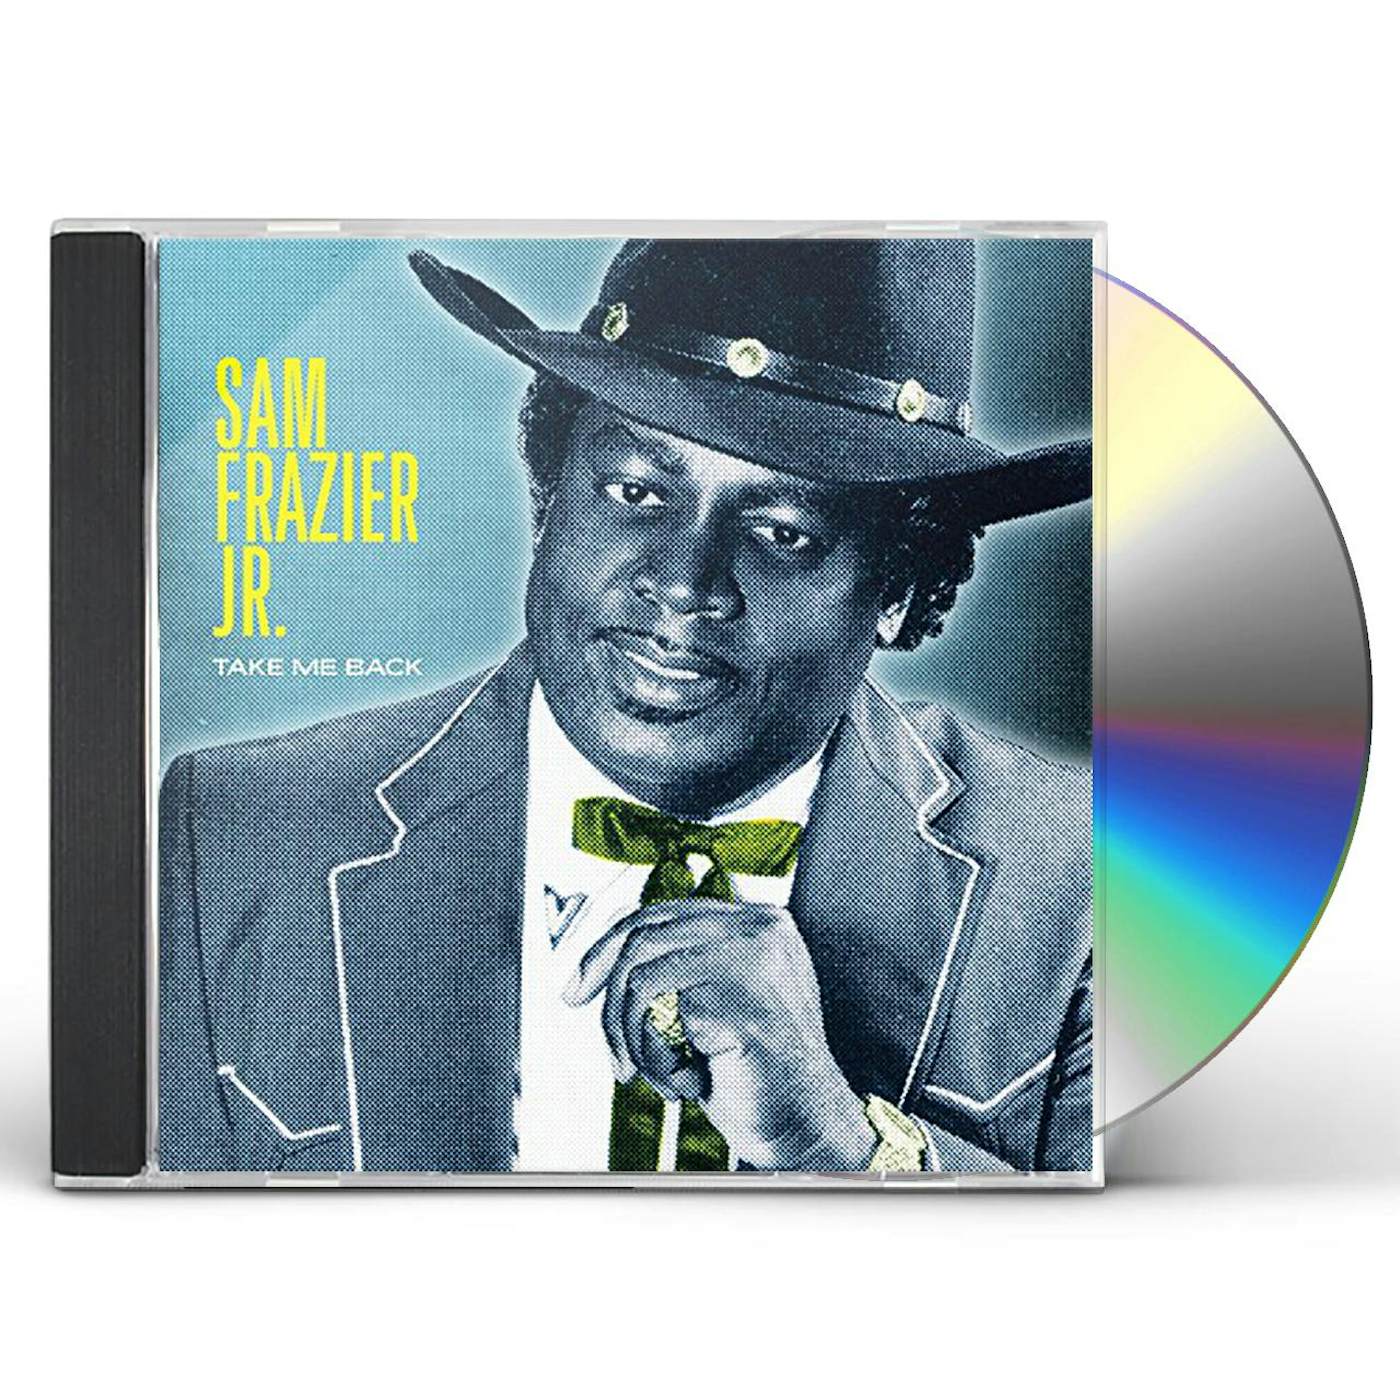 Sam Frazier, Jr. TAKE ME BACK CD